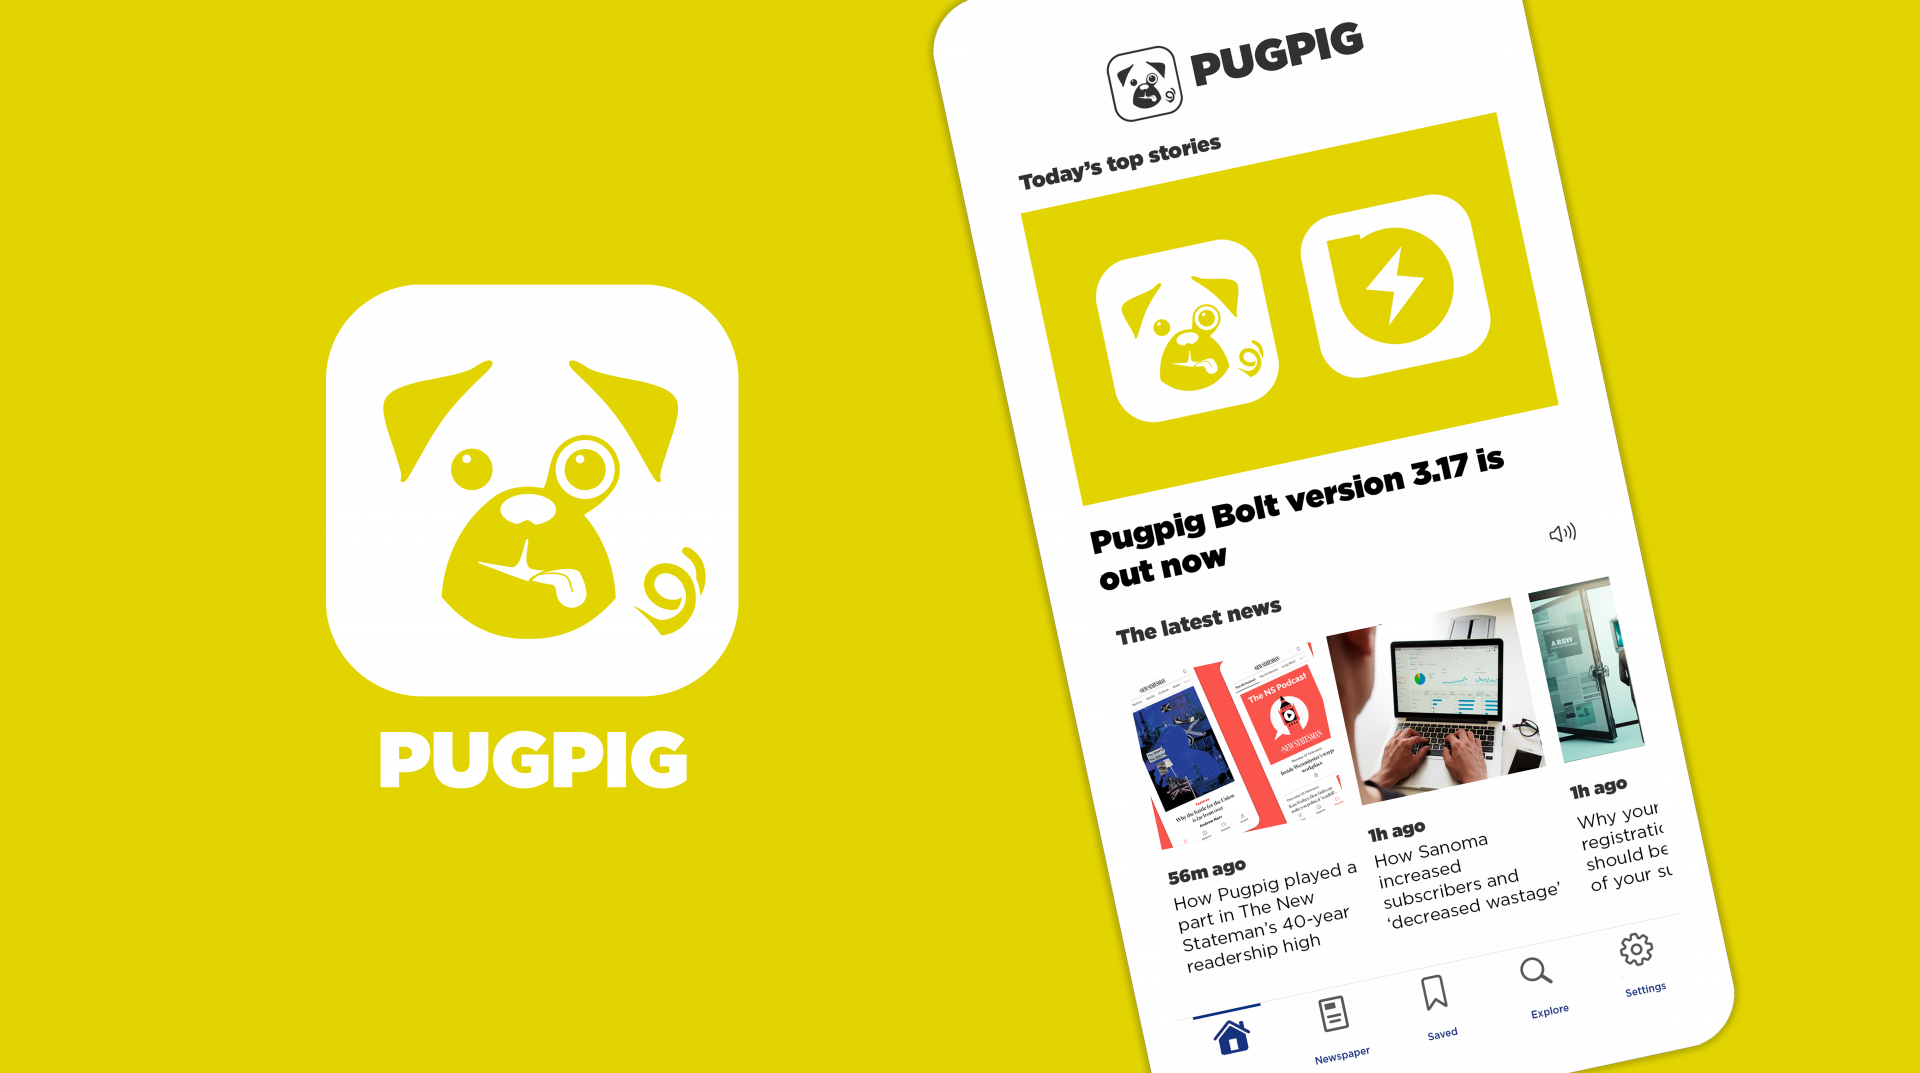 Pugpig 3.17 release